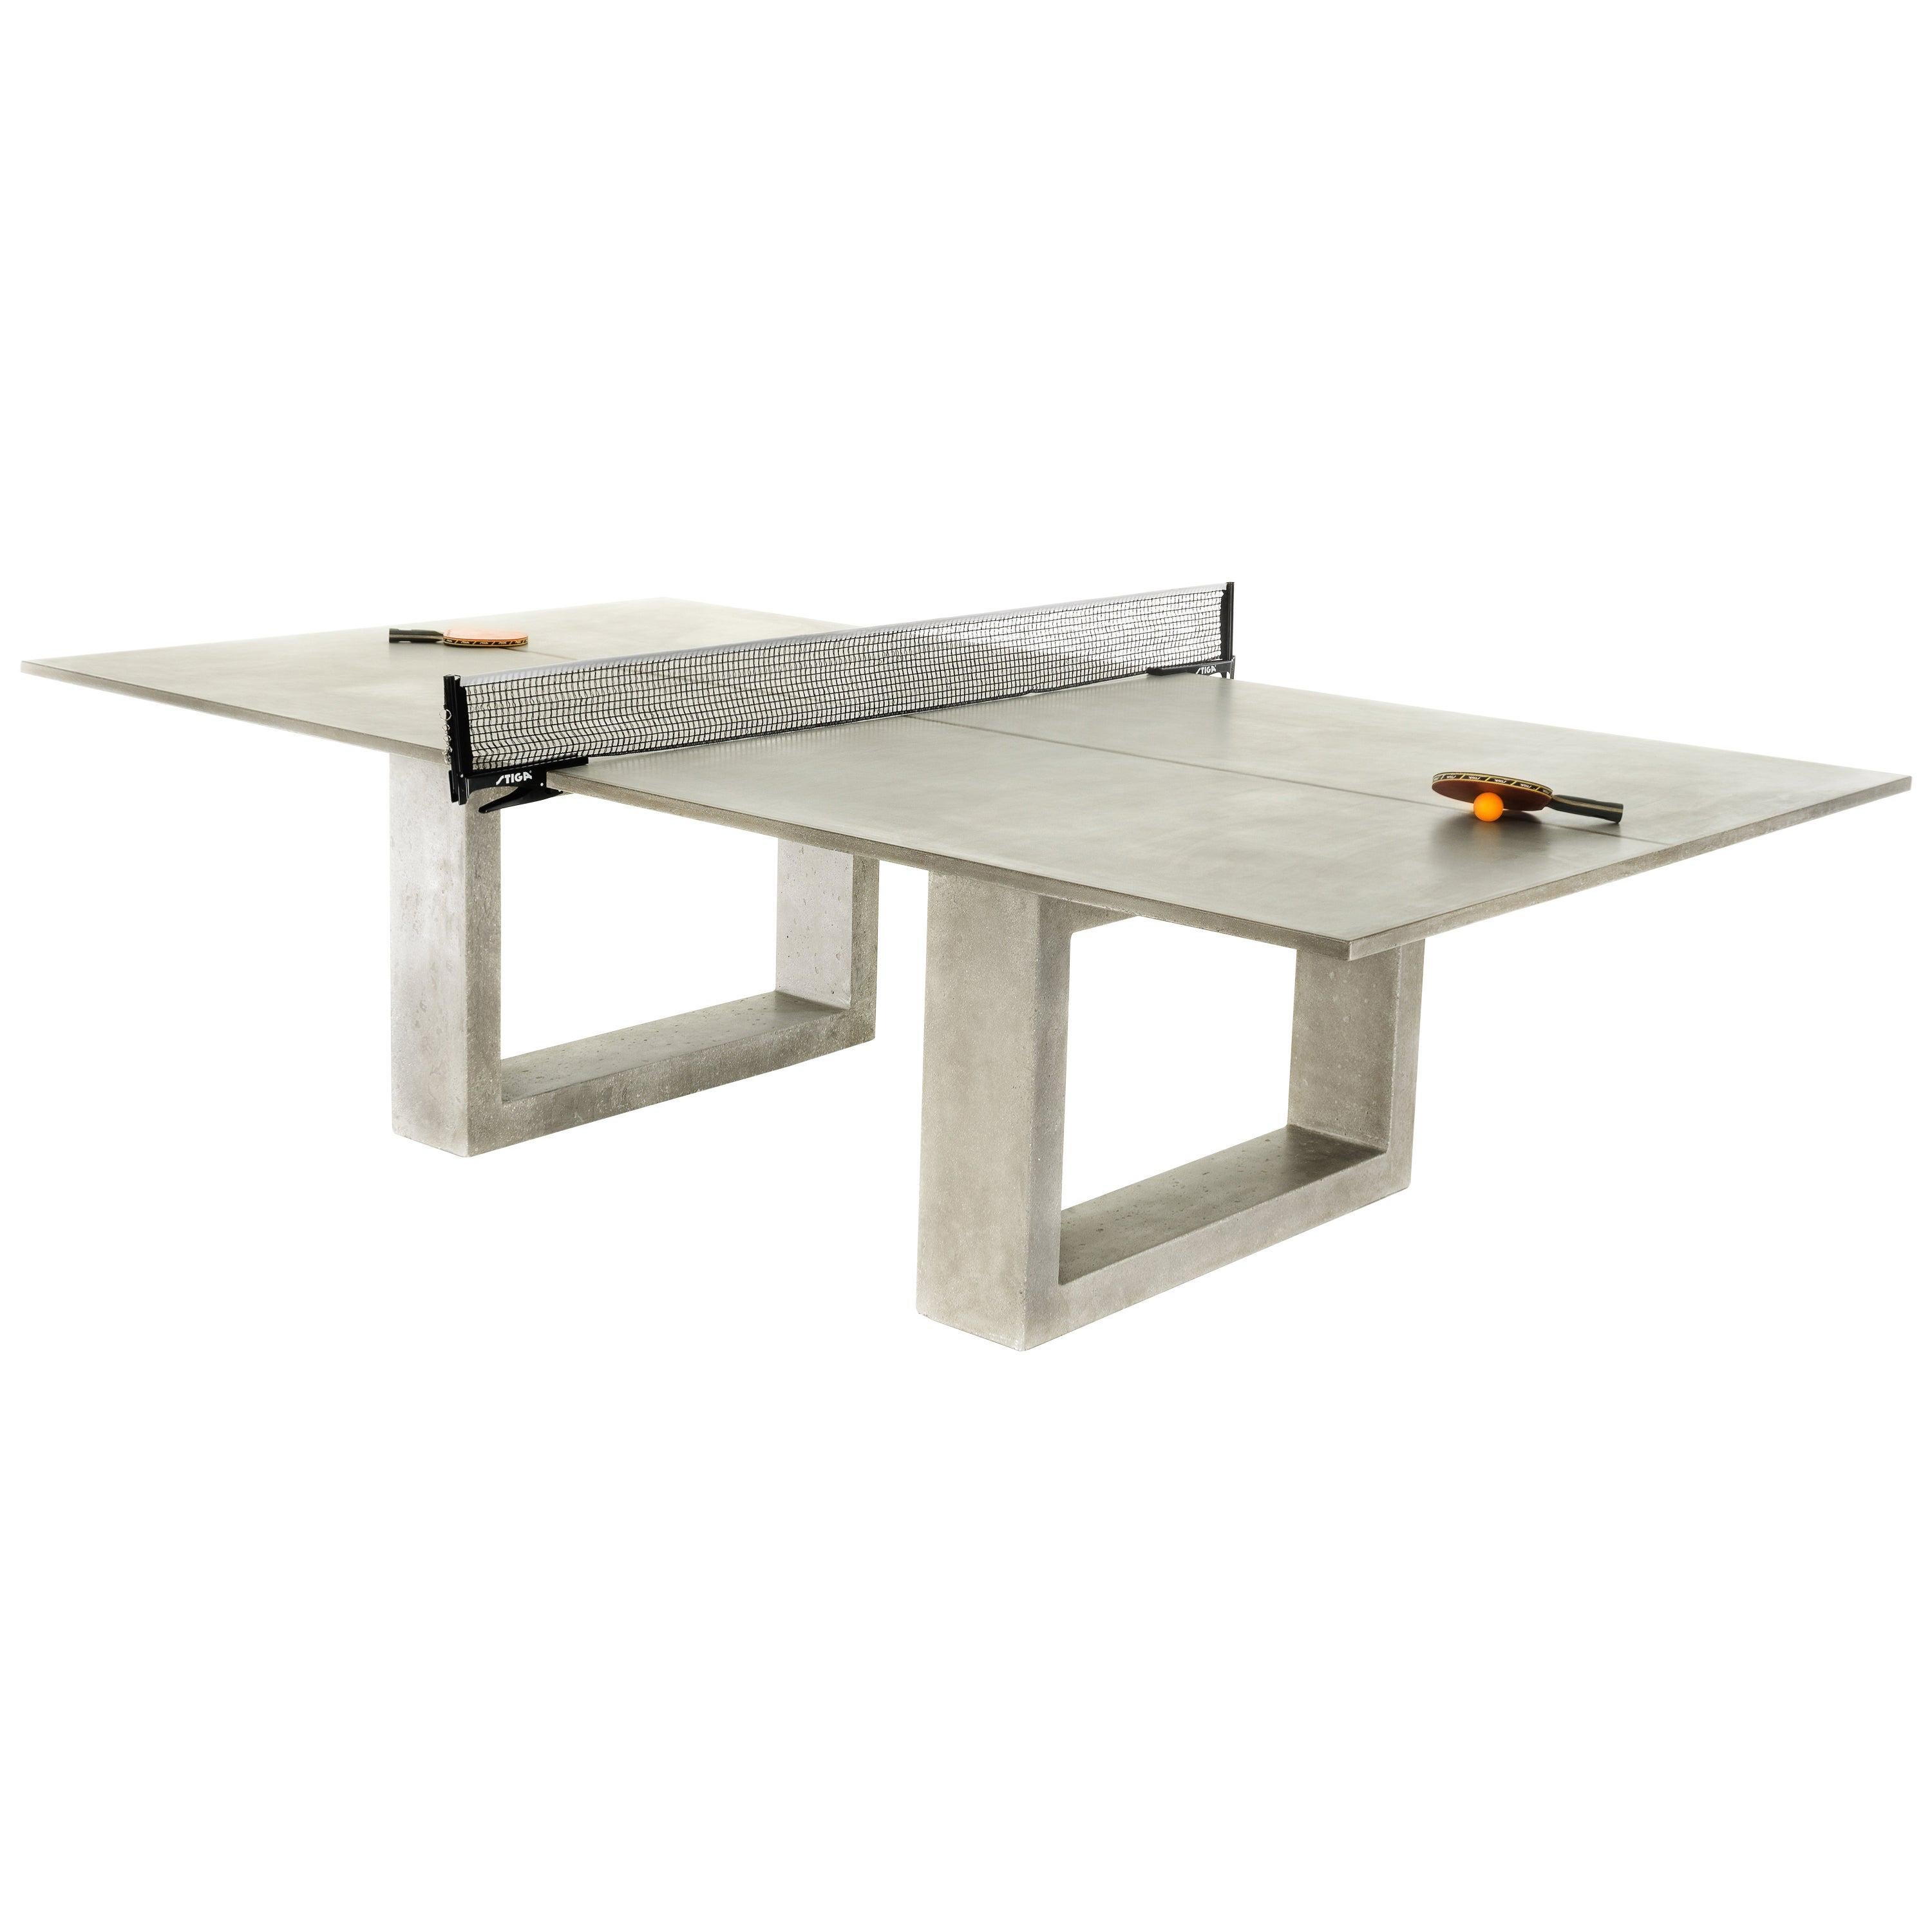 James de Wulf Commercial Concrete Ping Pong Table